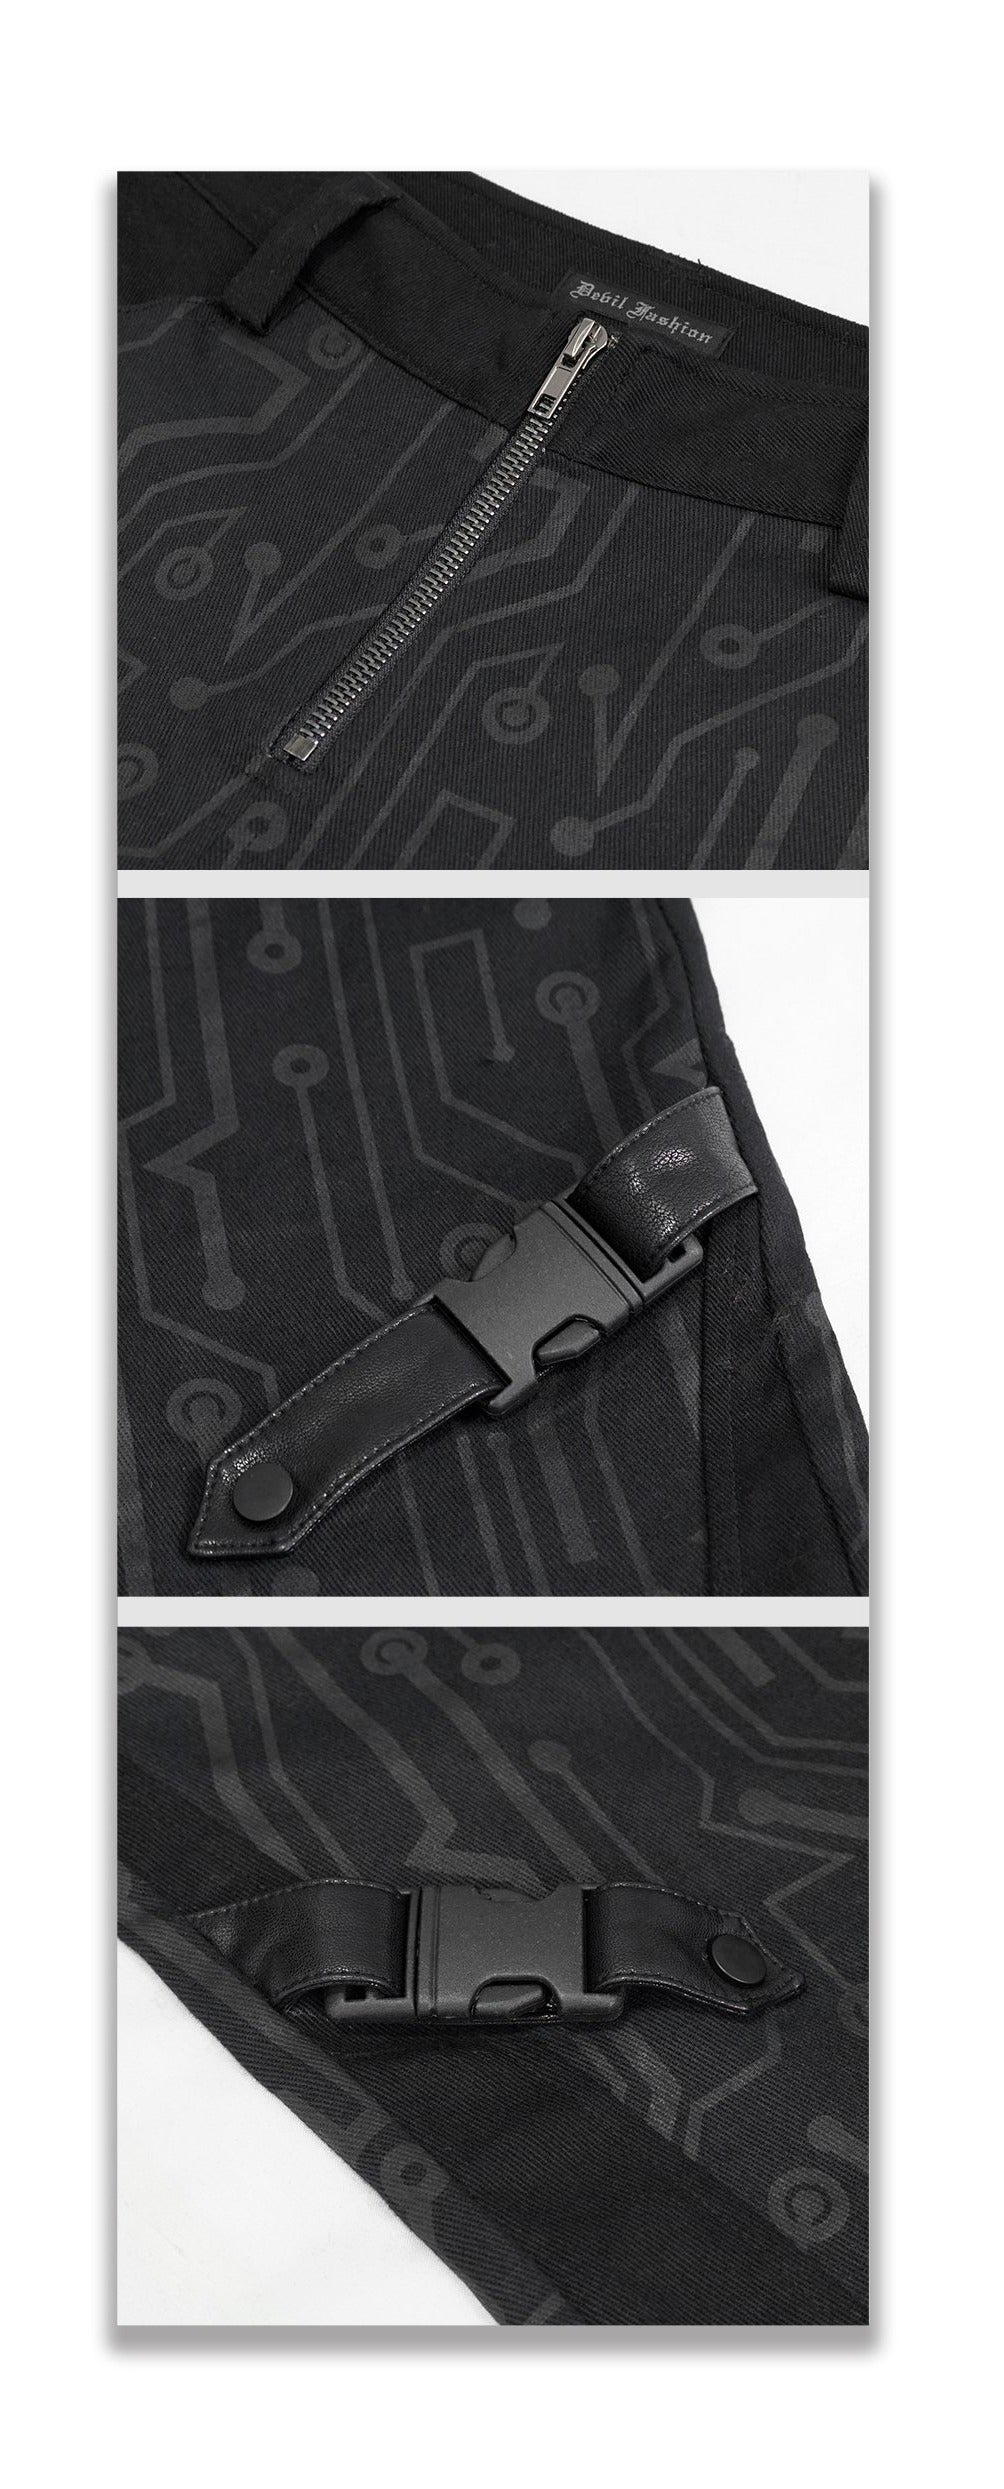 Pt142 Cyberpunk Circuit Printed Leather Loops Women Pants